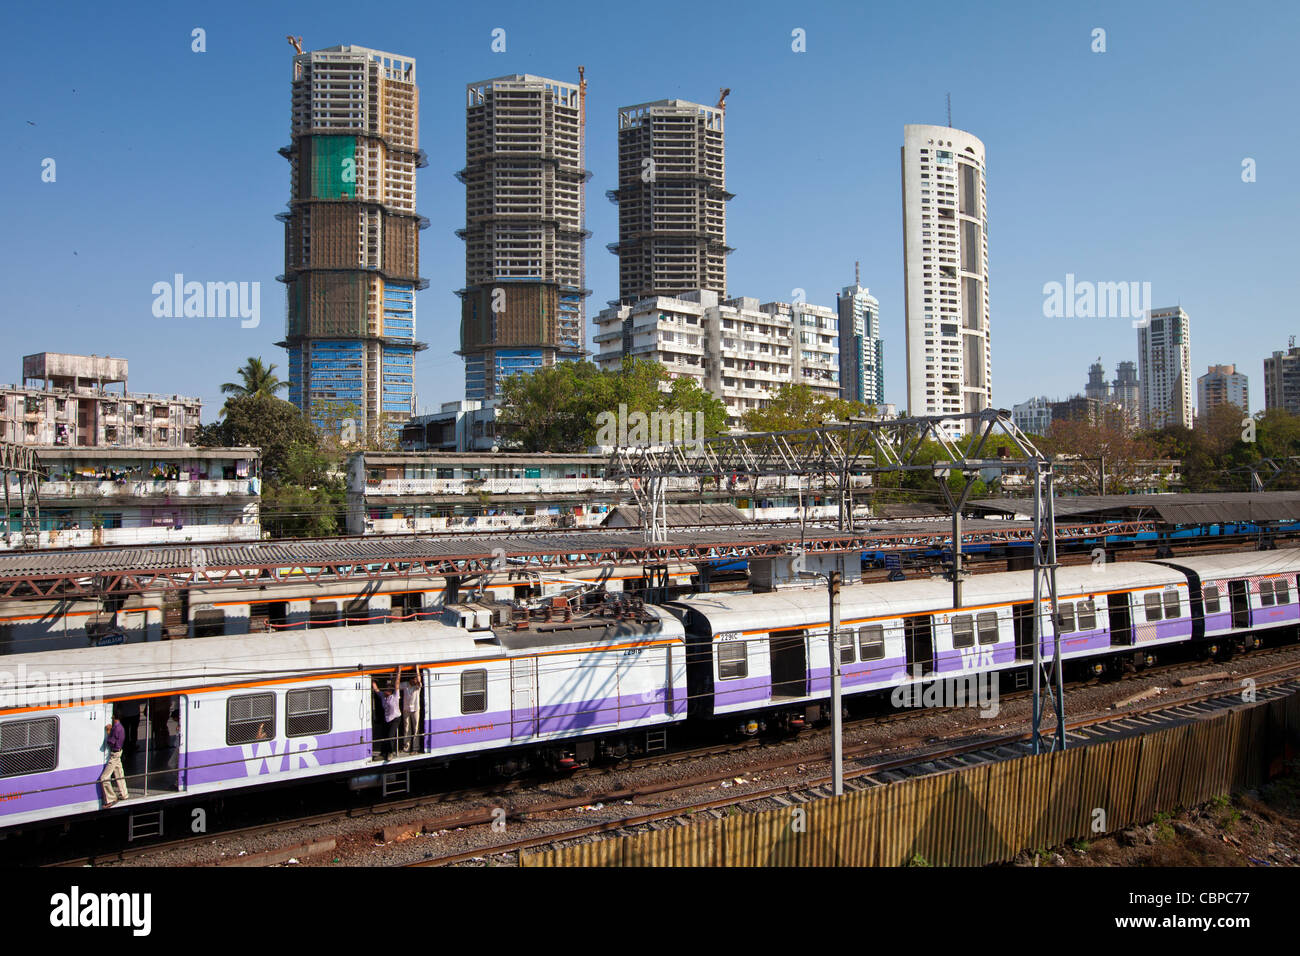 High rise developments by Mahalaxmi Station and the Western Railways train of the Mumbai Suburban Railway, India Stock Photo